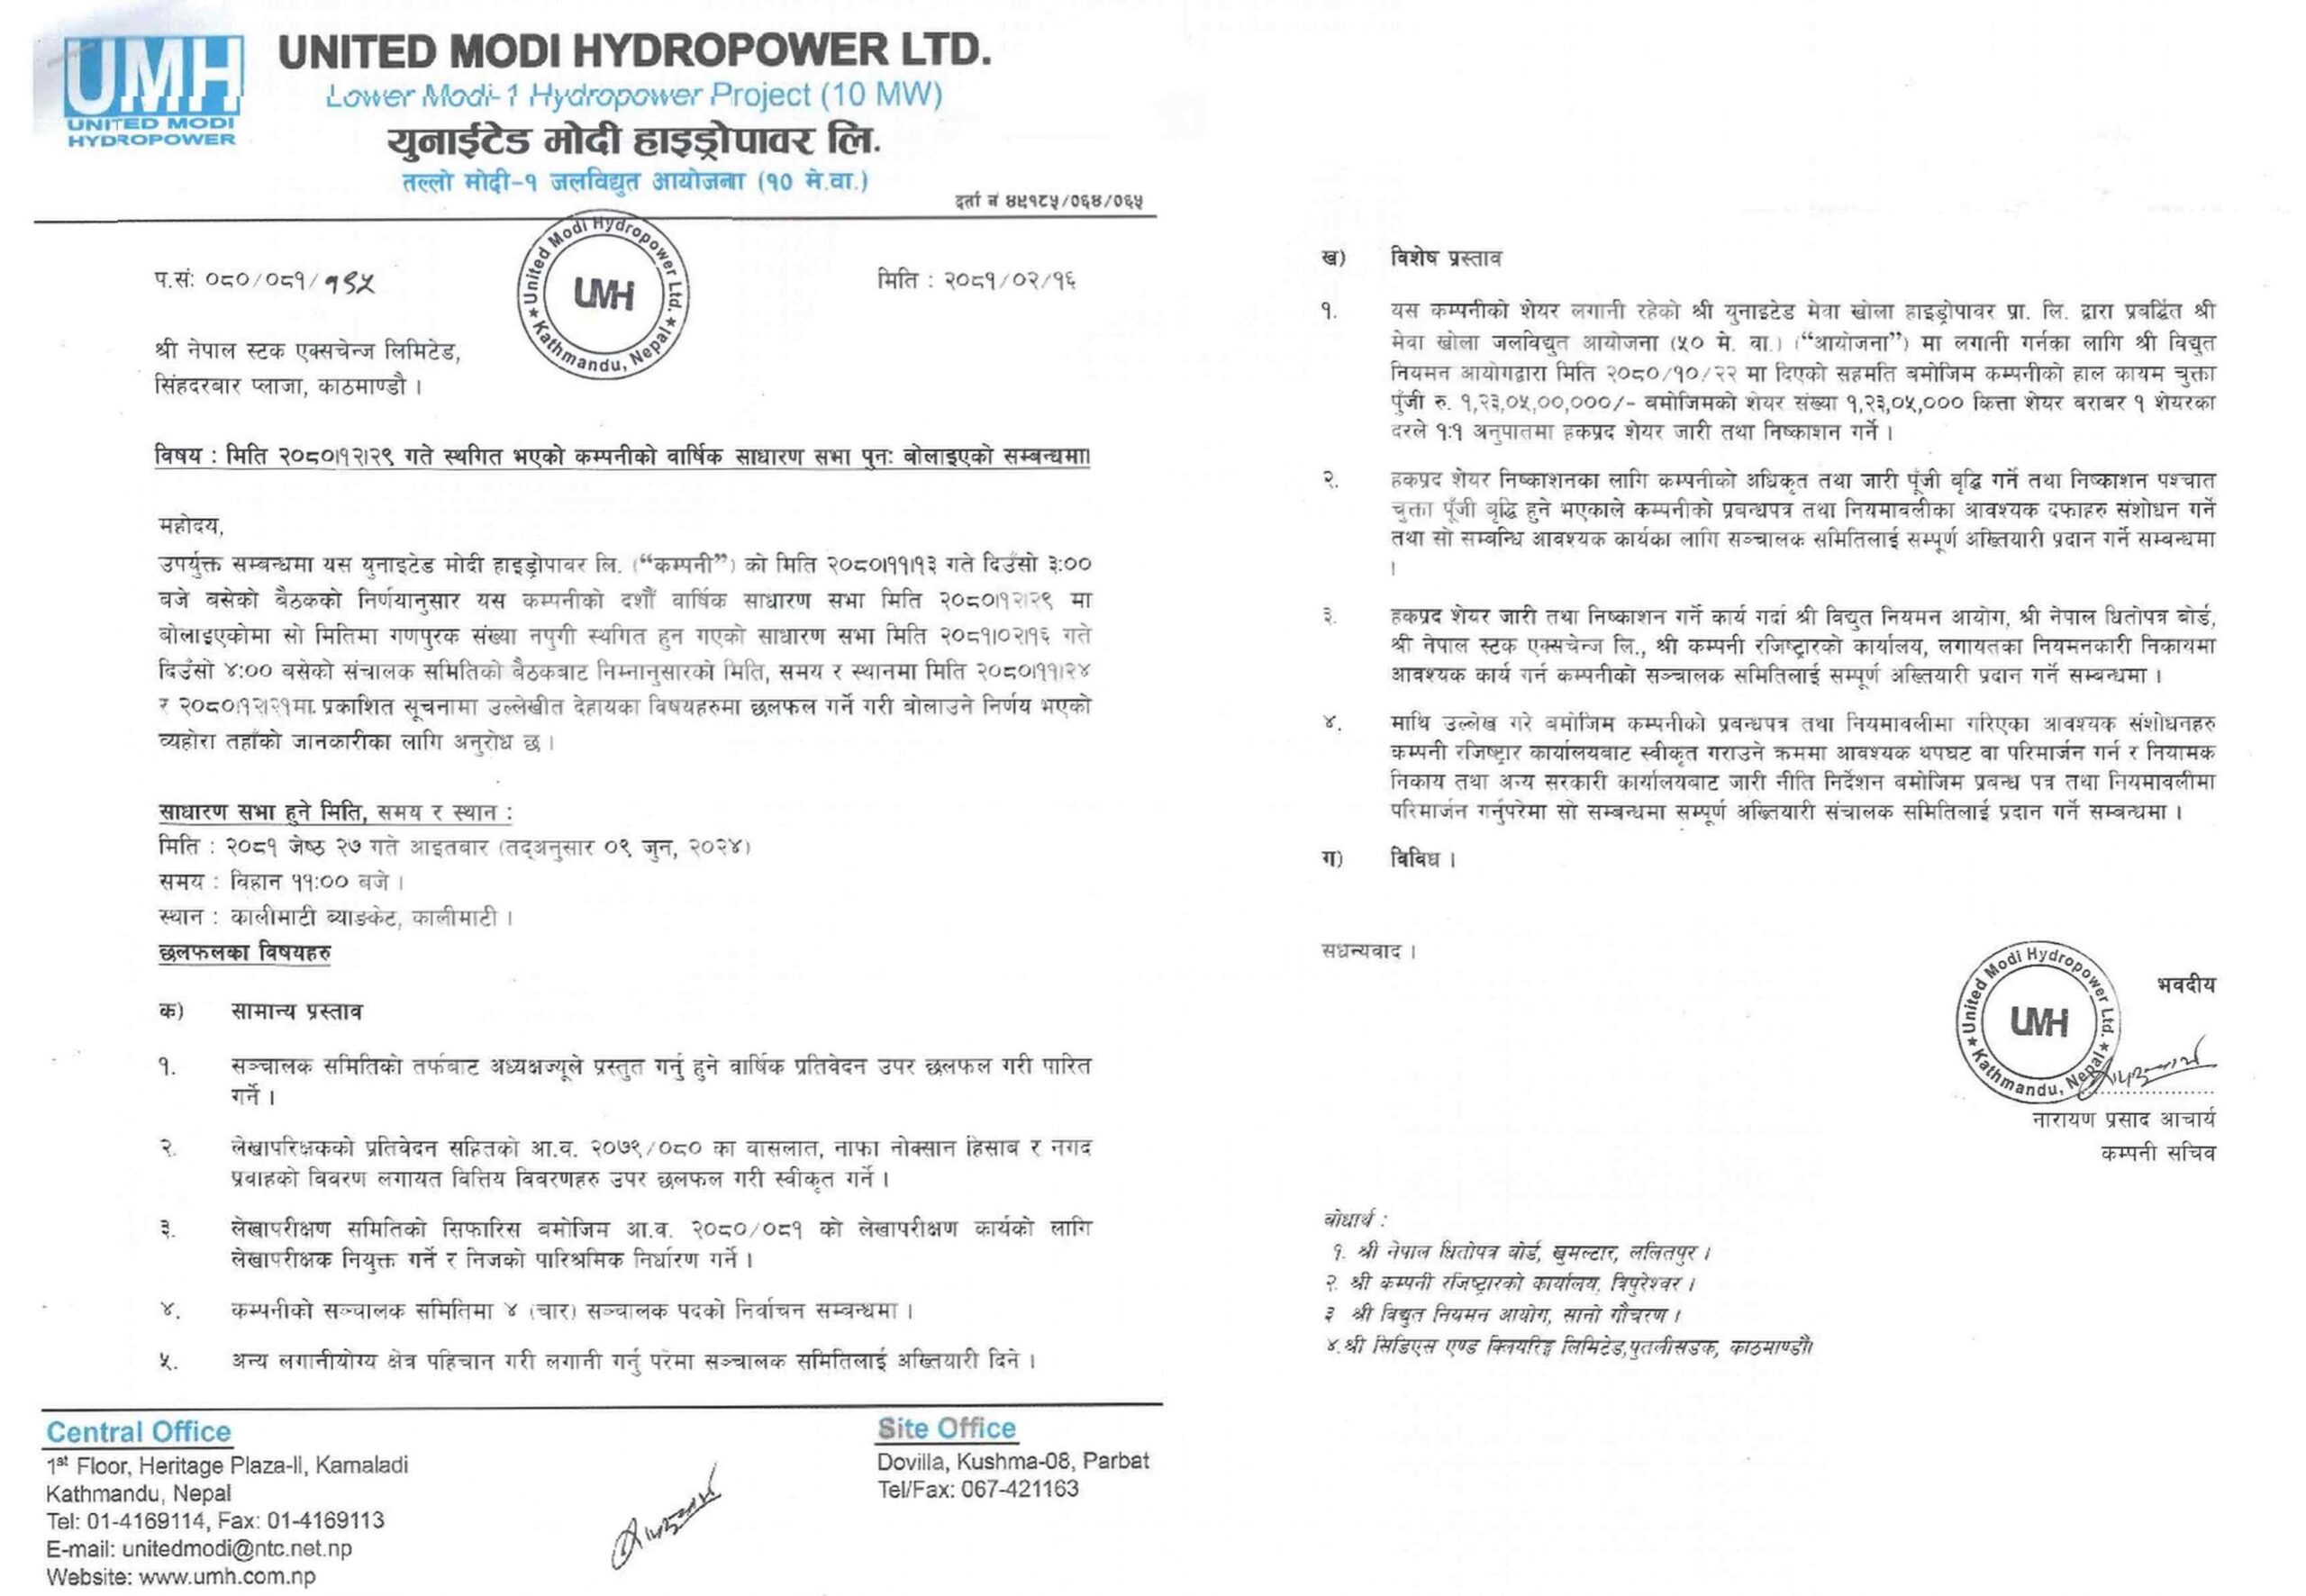 United Modi Hydropower postponed its 10th AGM